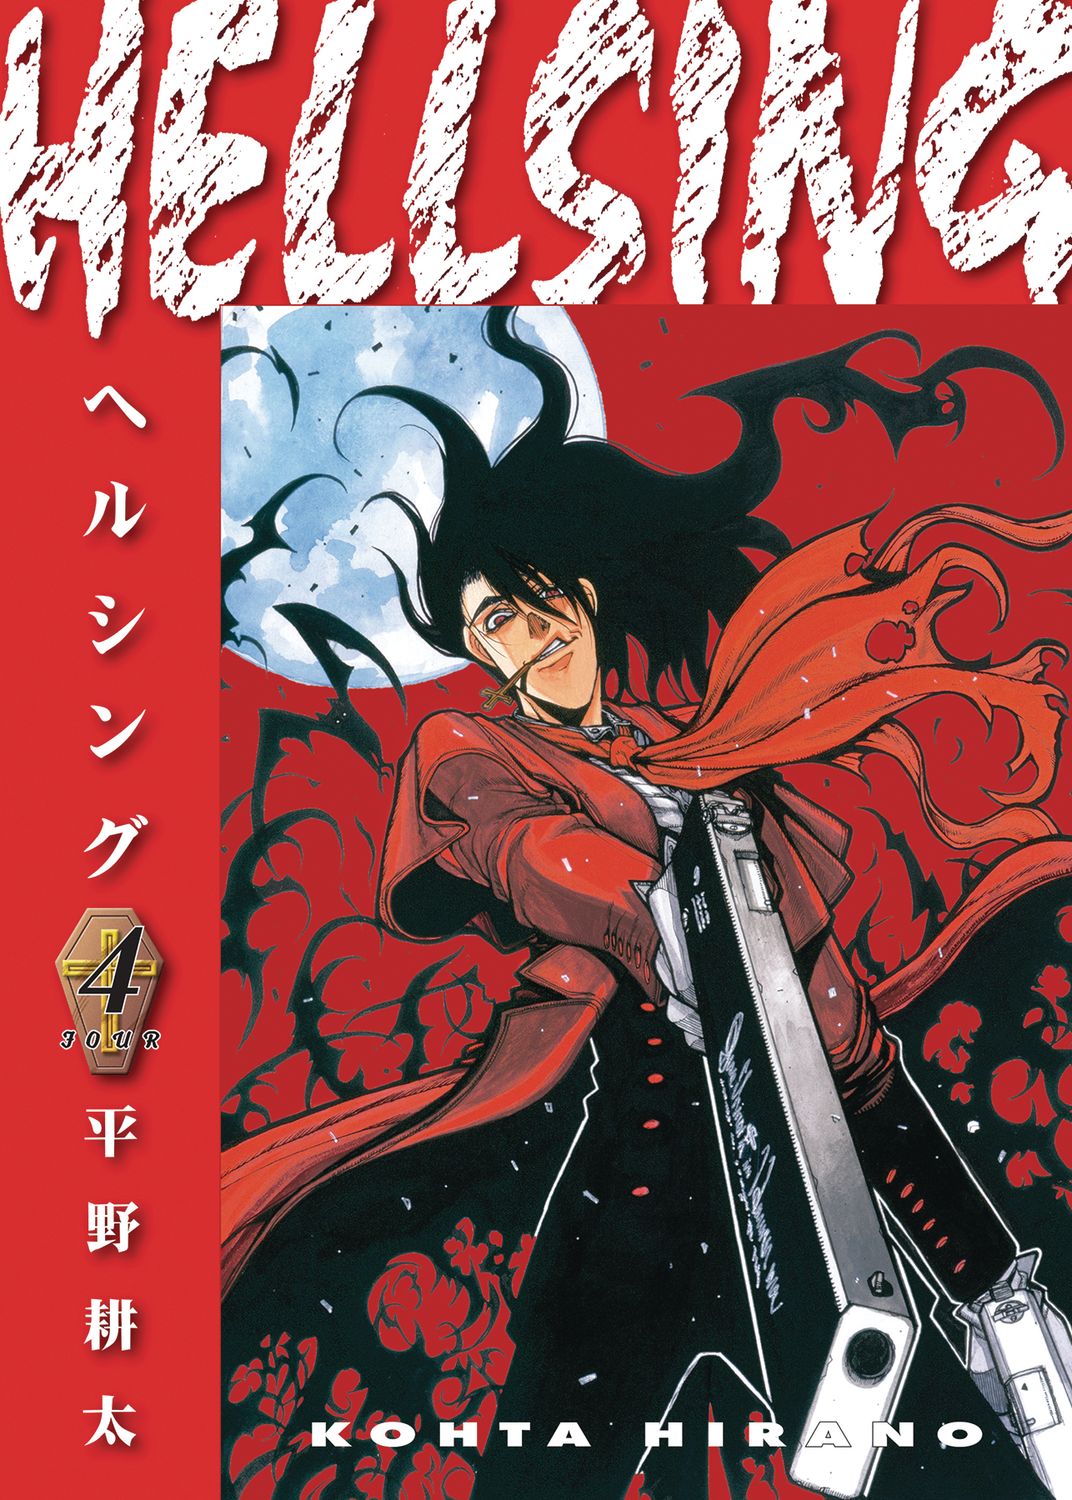 Hellsing Alucard Vampire Anime Poster – My Hot Posters